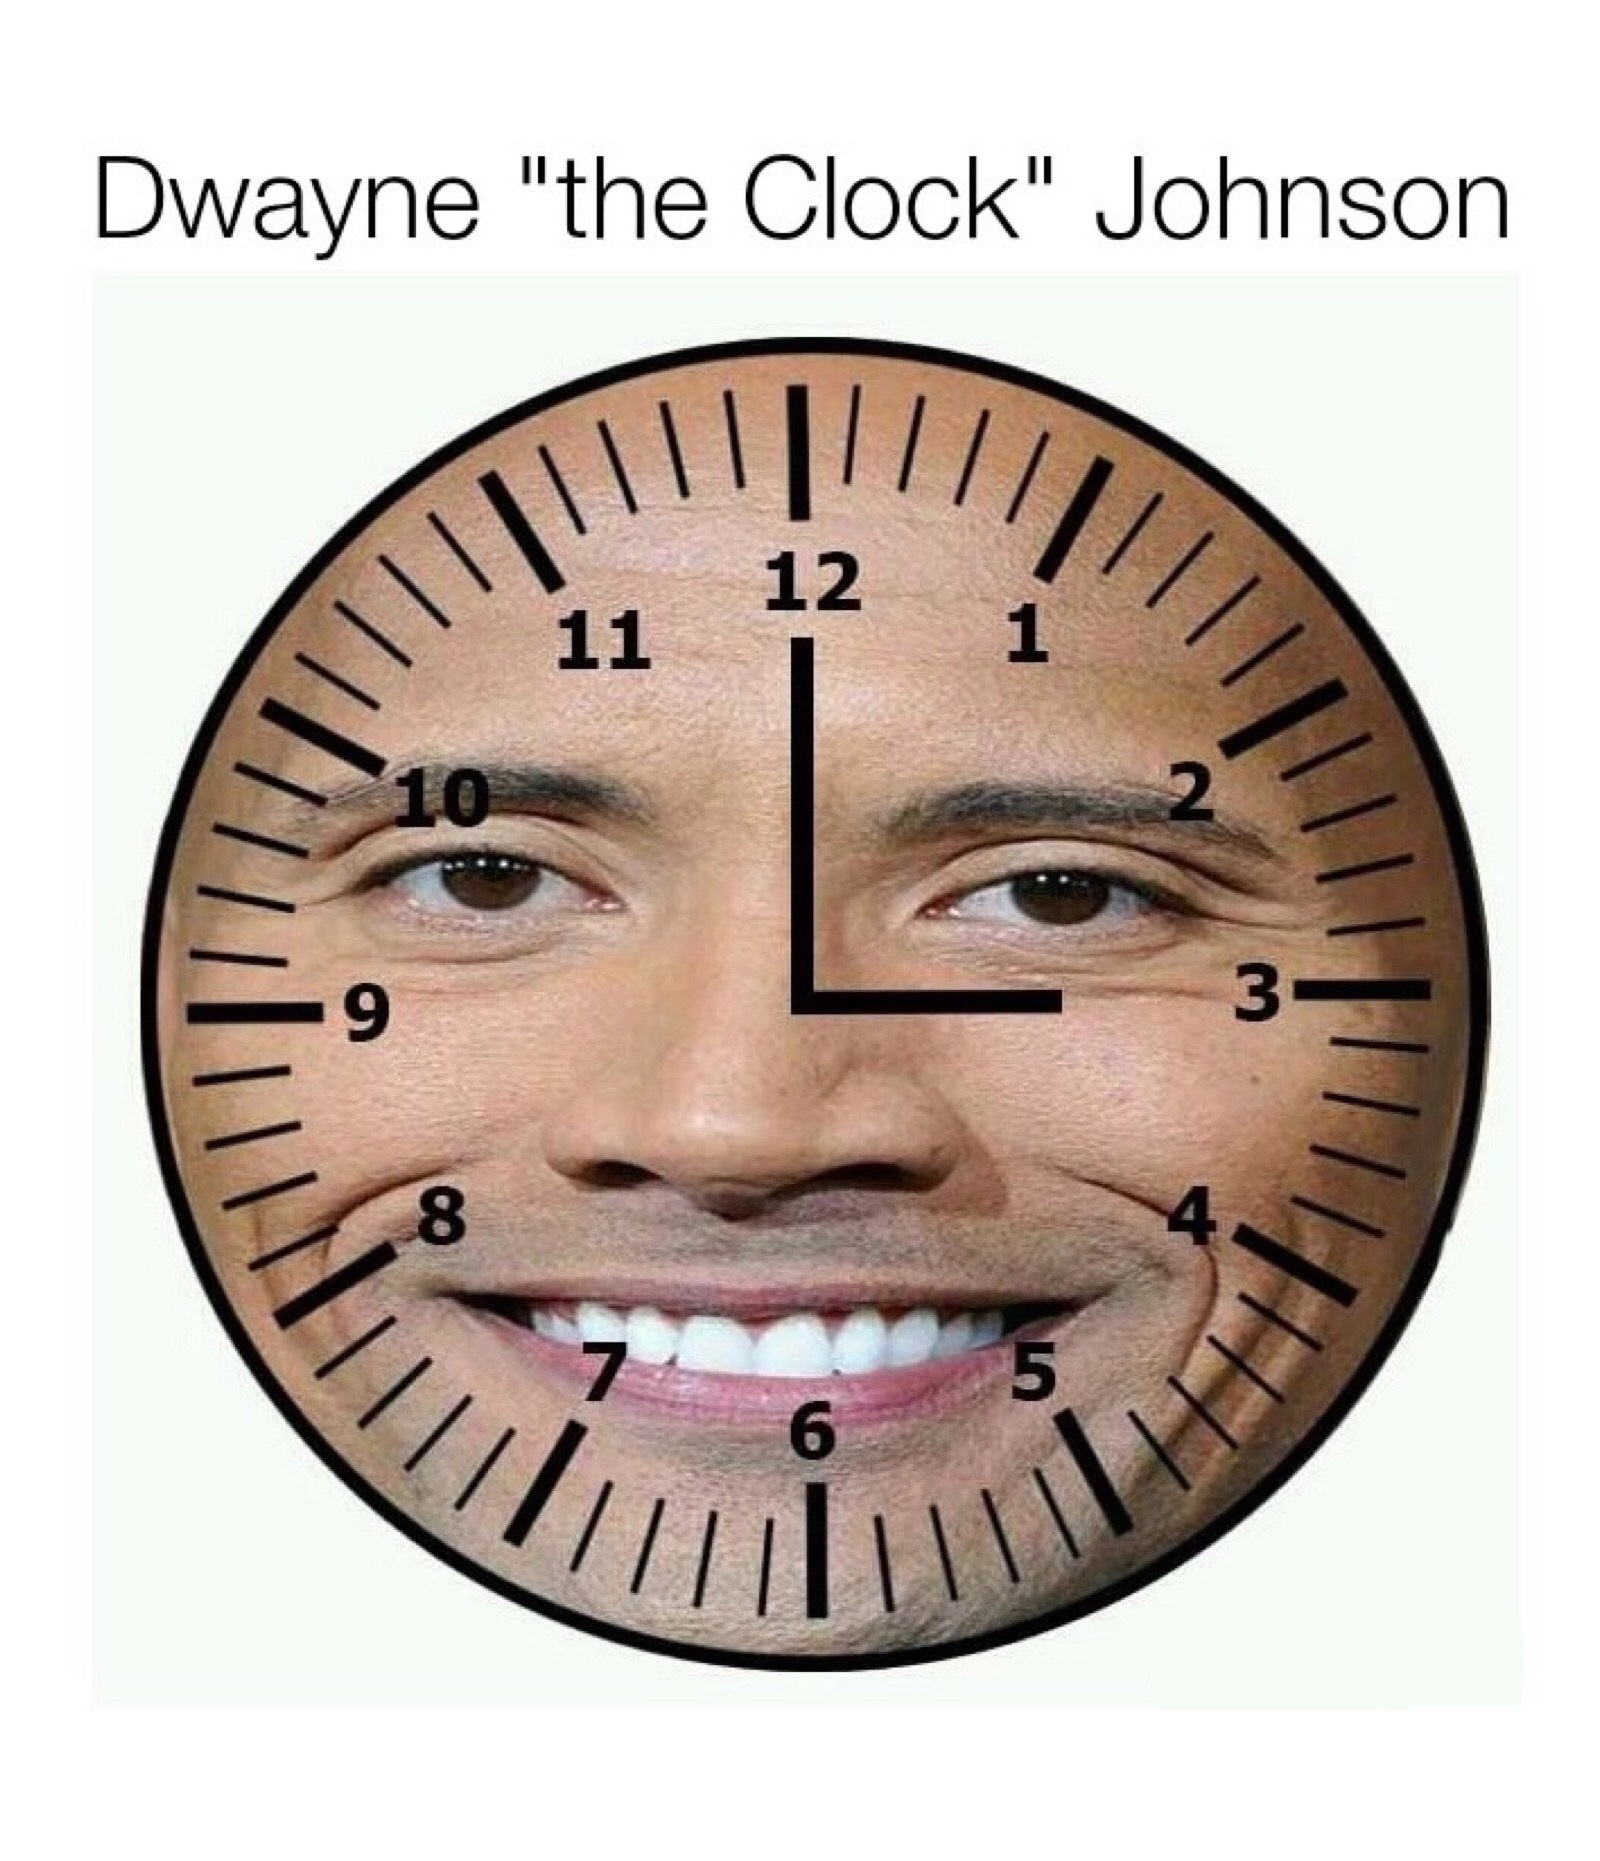 memes - dwayne johnson meme - Dwayne "the Clock" Johnson 12 Viii 11